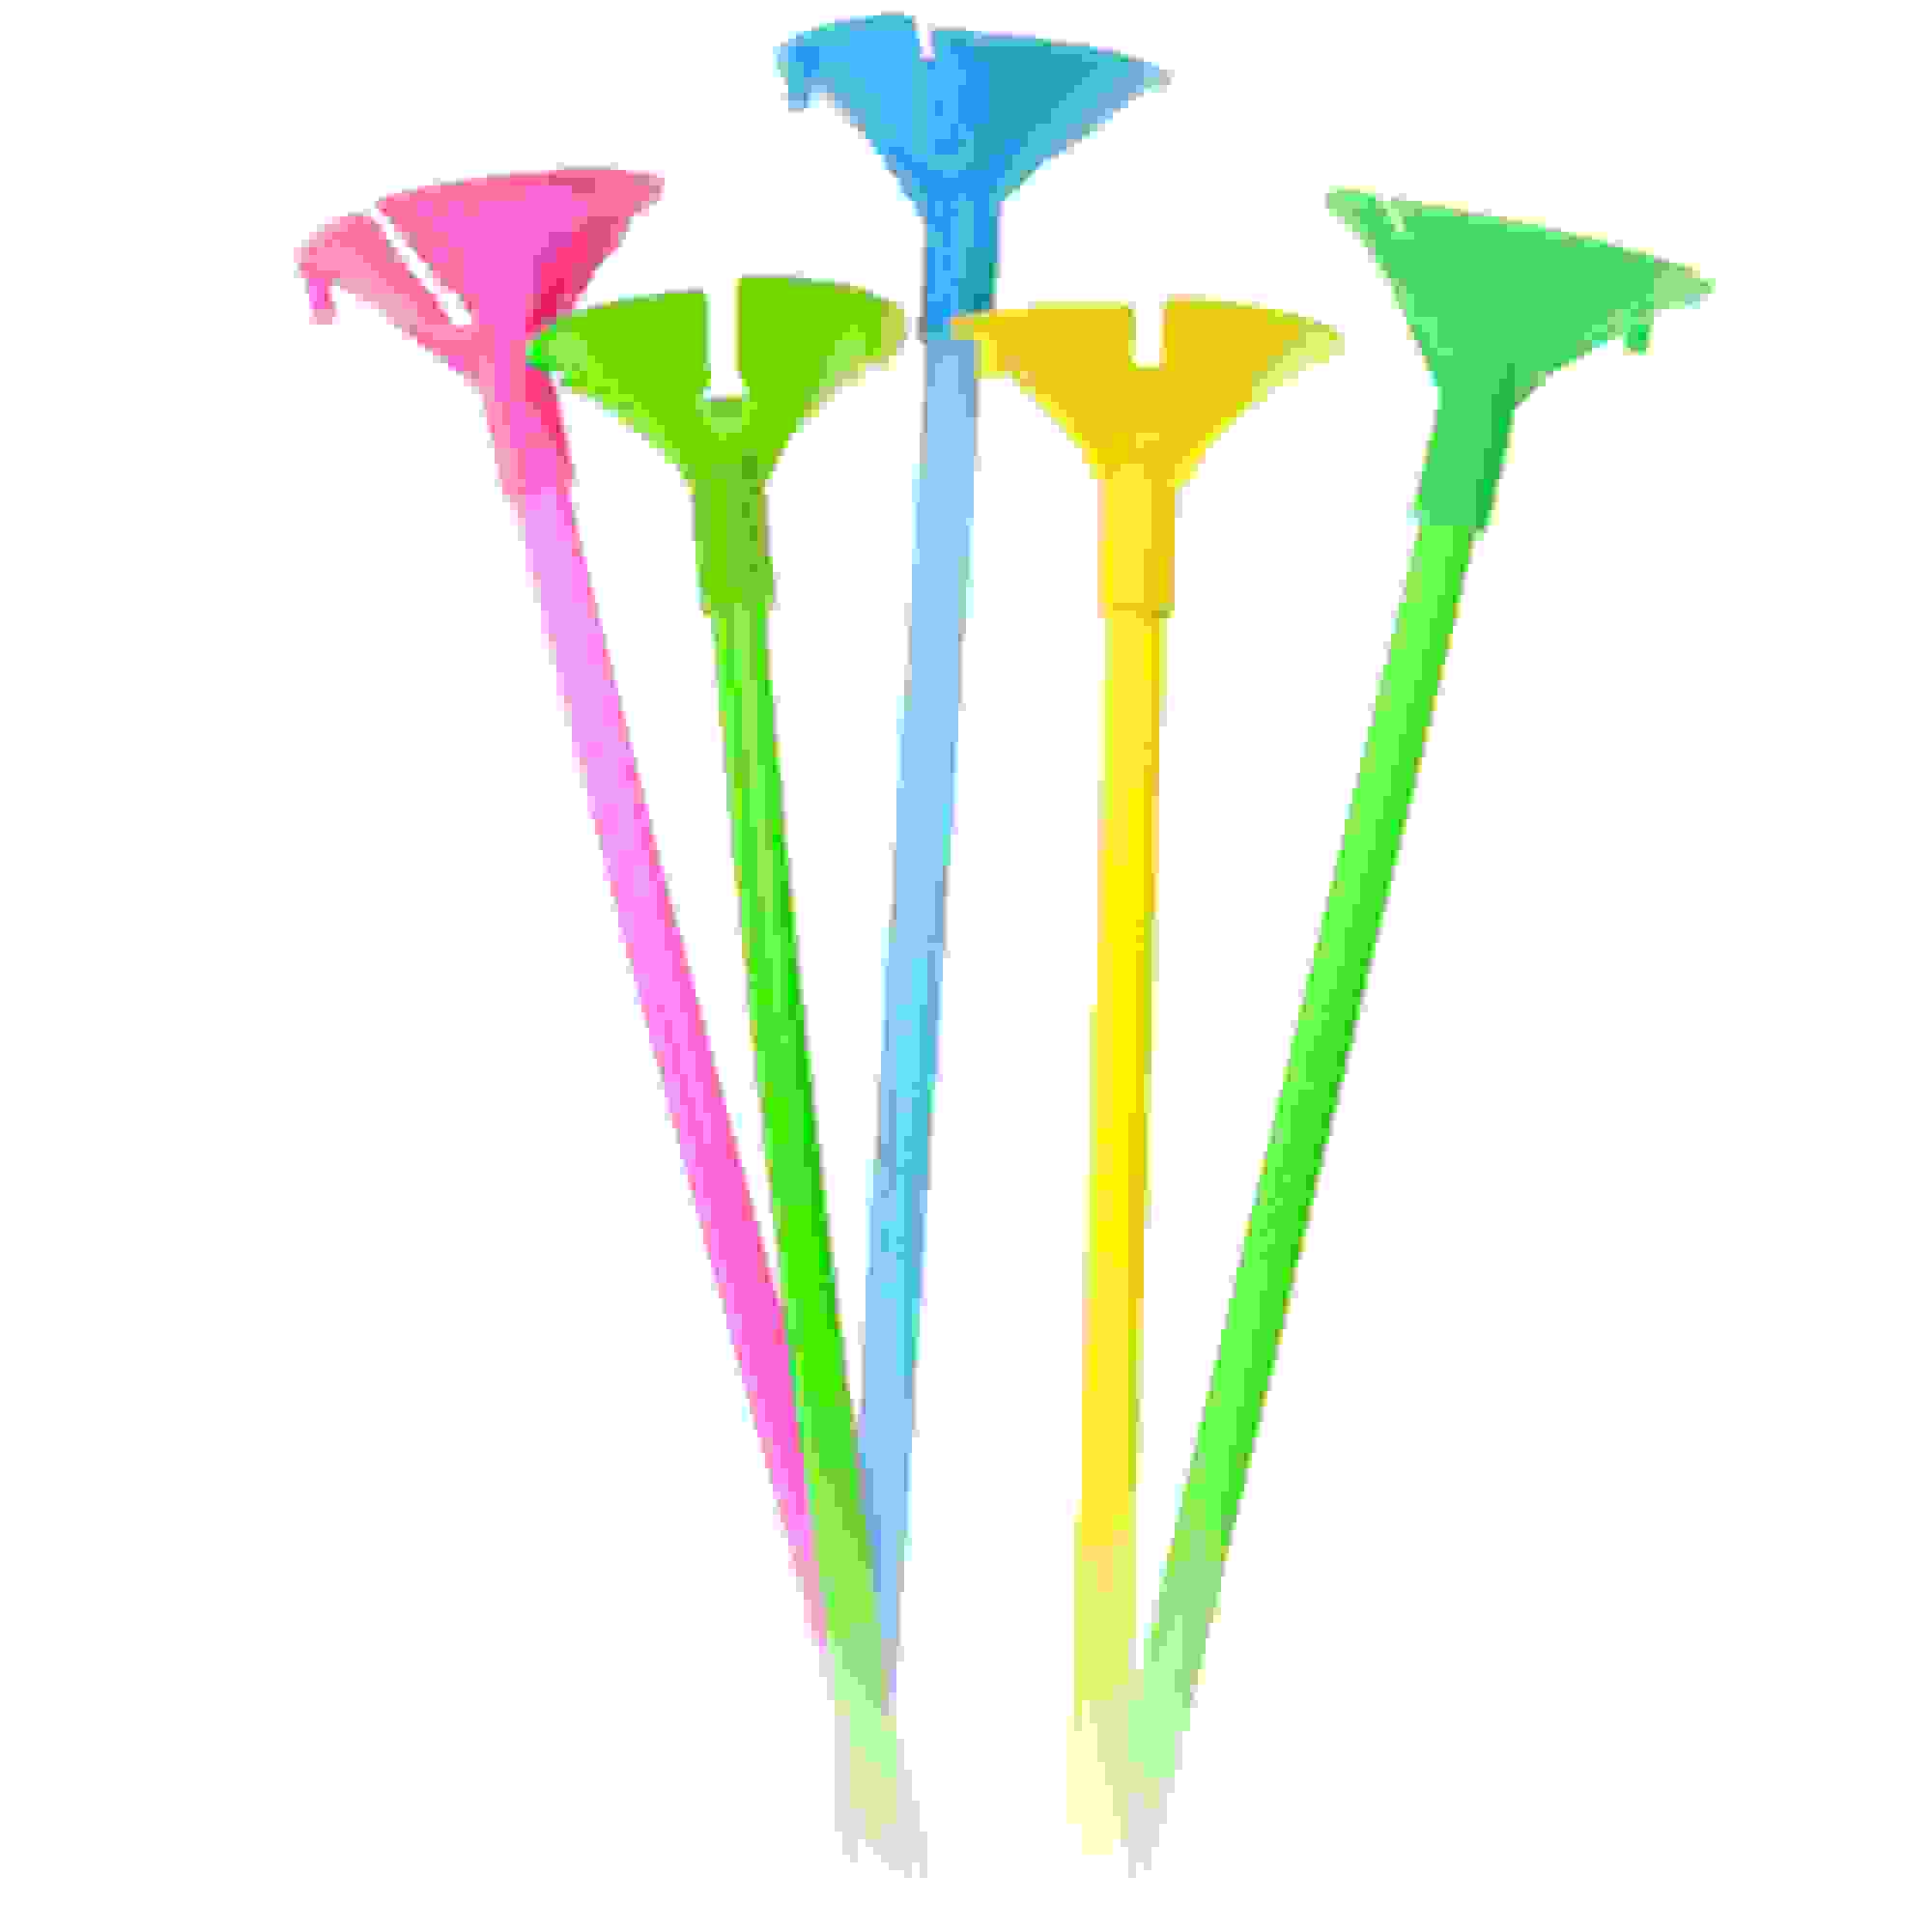 Multicolor Balloon Cups & Sticks, 8ct